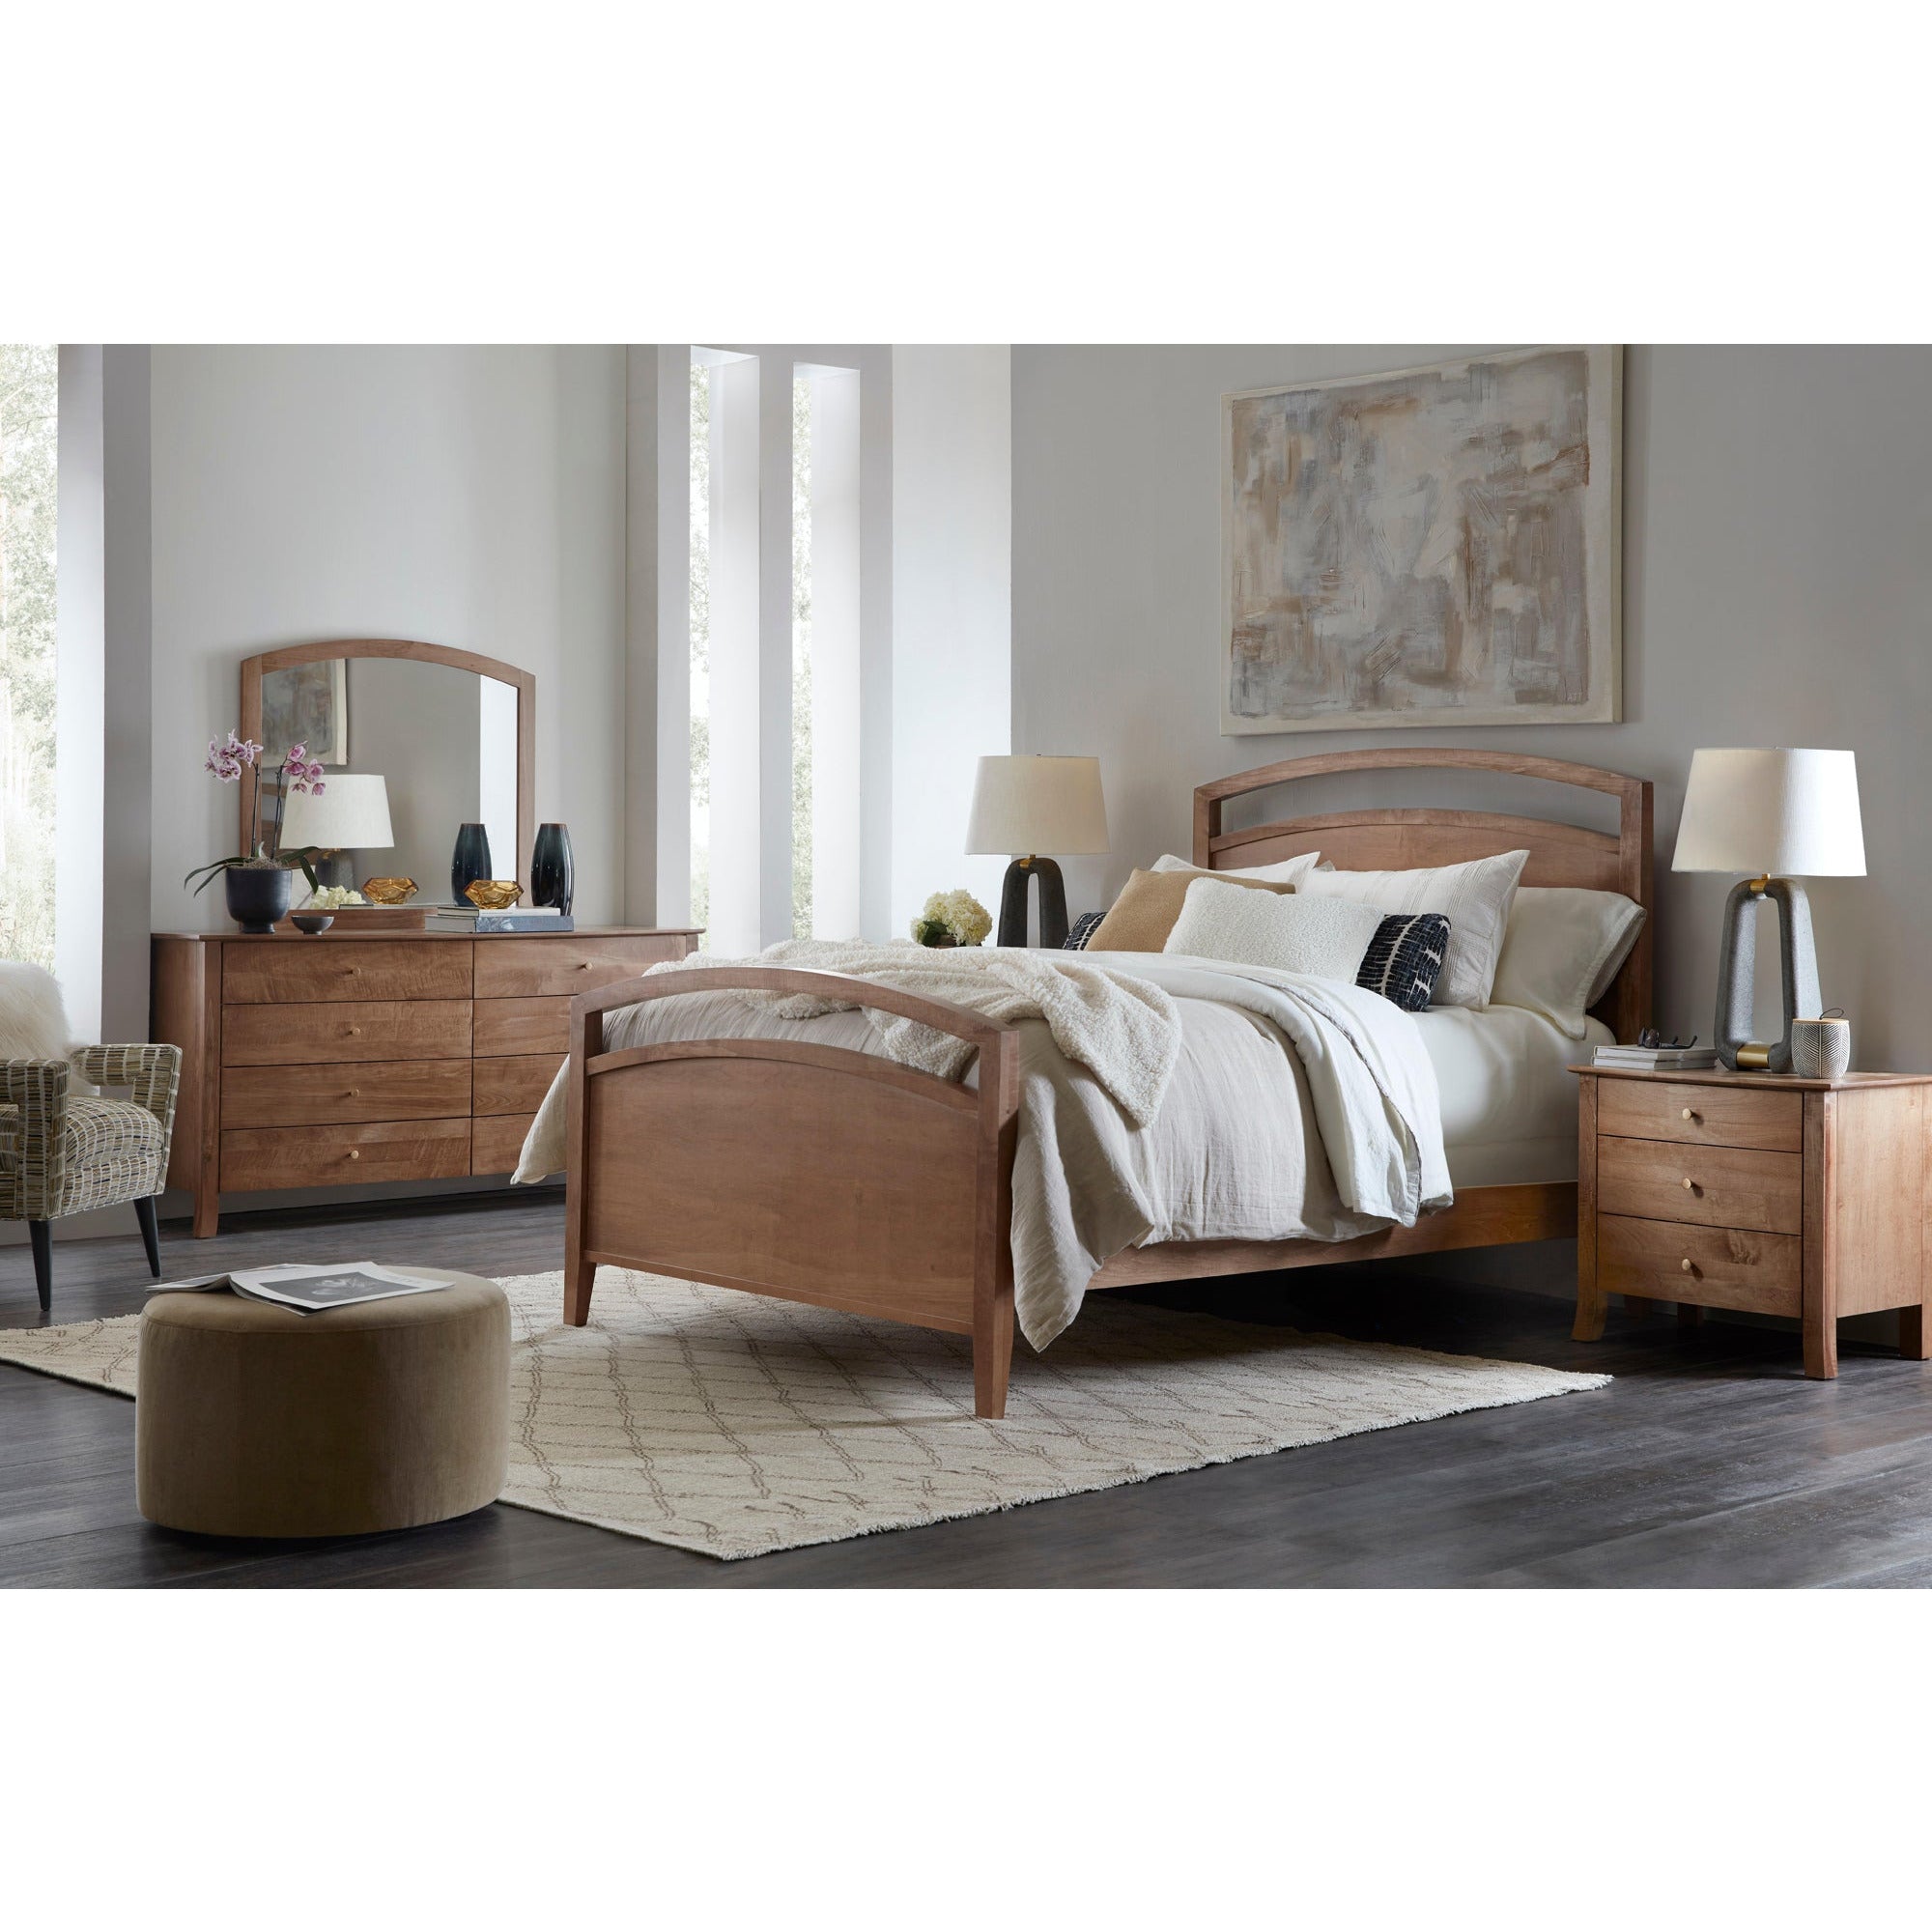 Bedroom Furniture - Furniture Fair